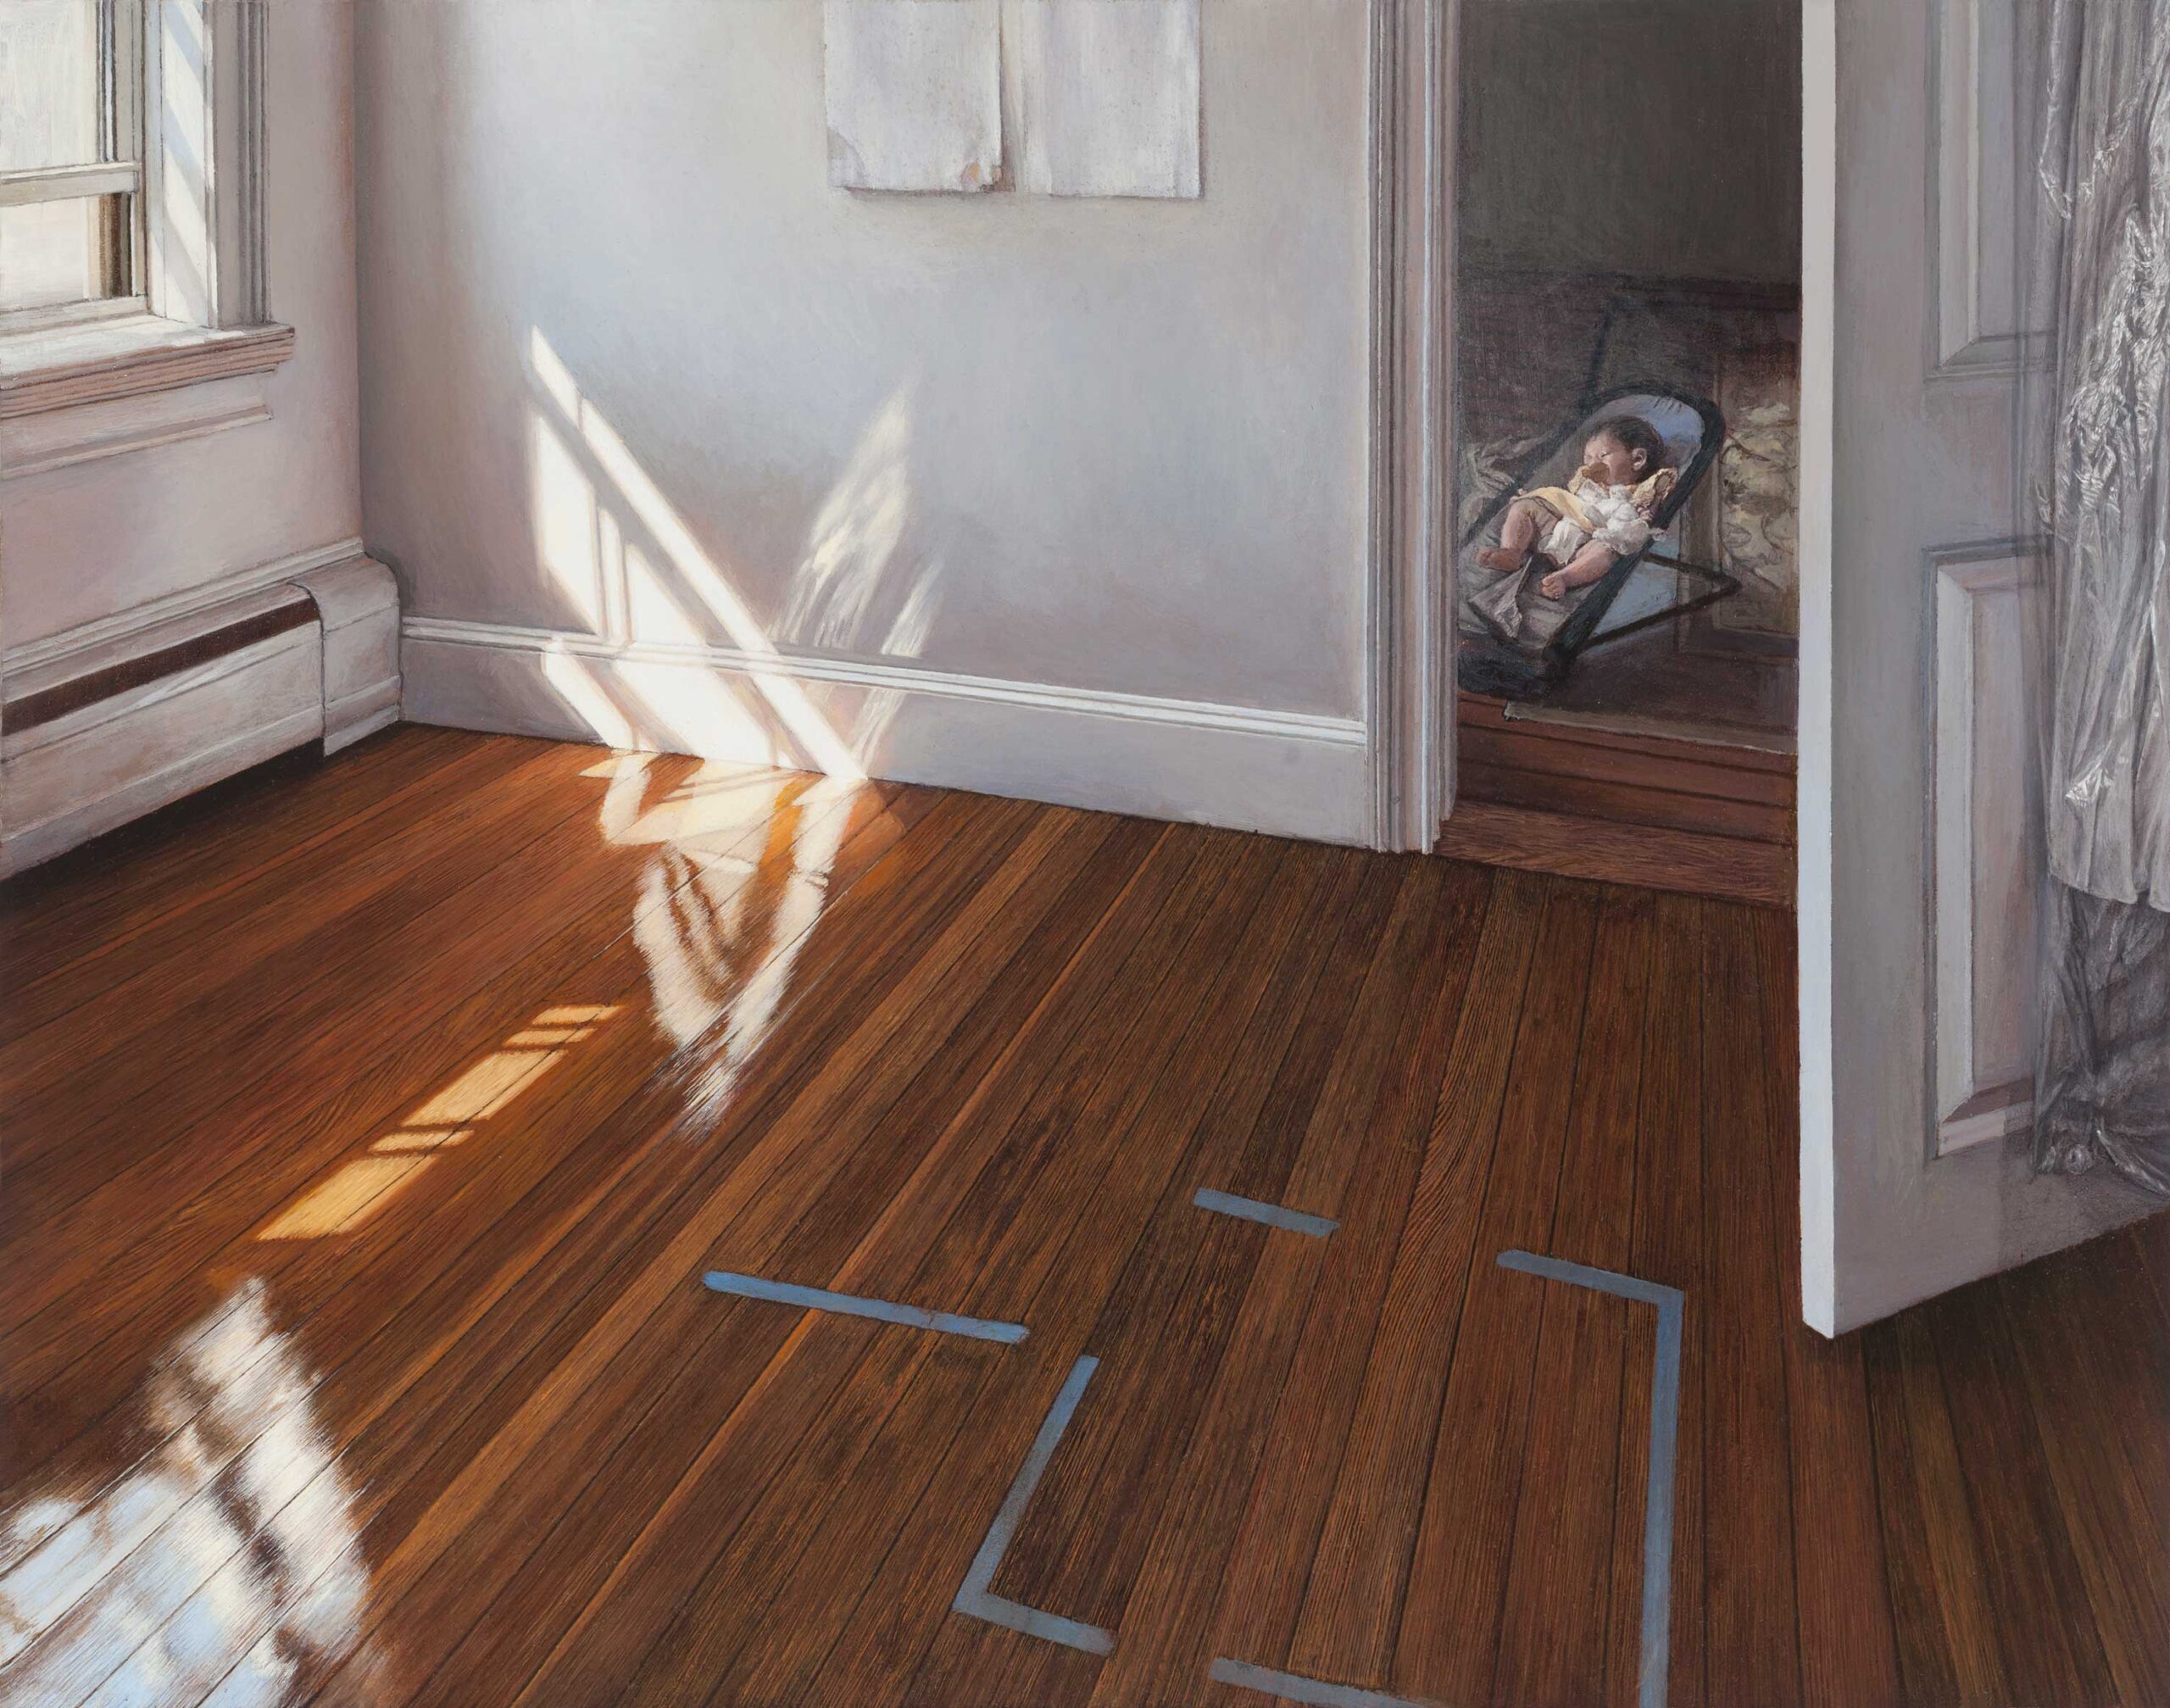 Maya Brodsky, “Sunbeam and Eda,” 2019, Oil on panel, 11 x 14 inches